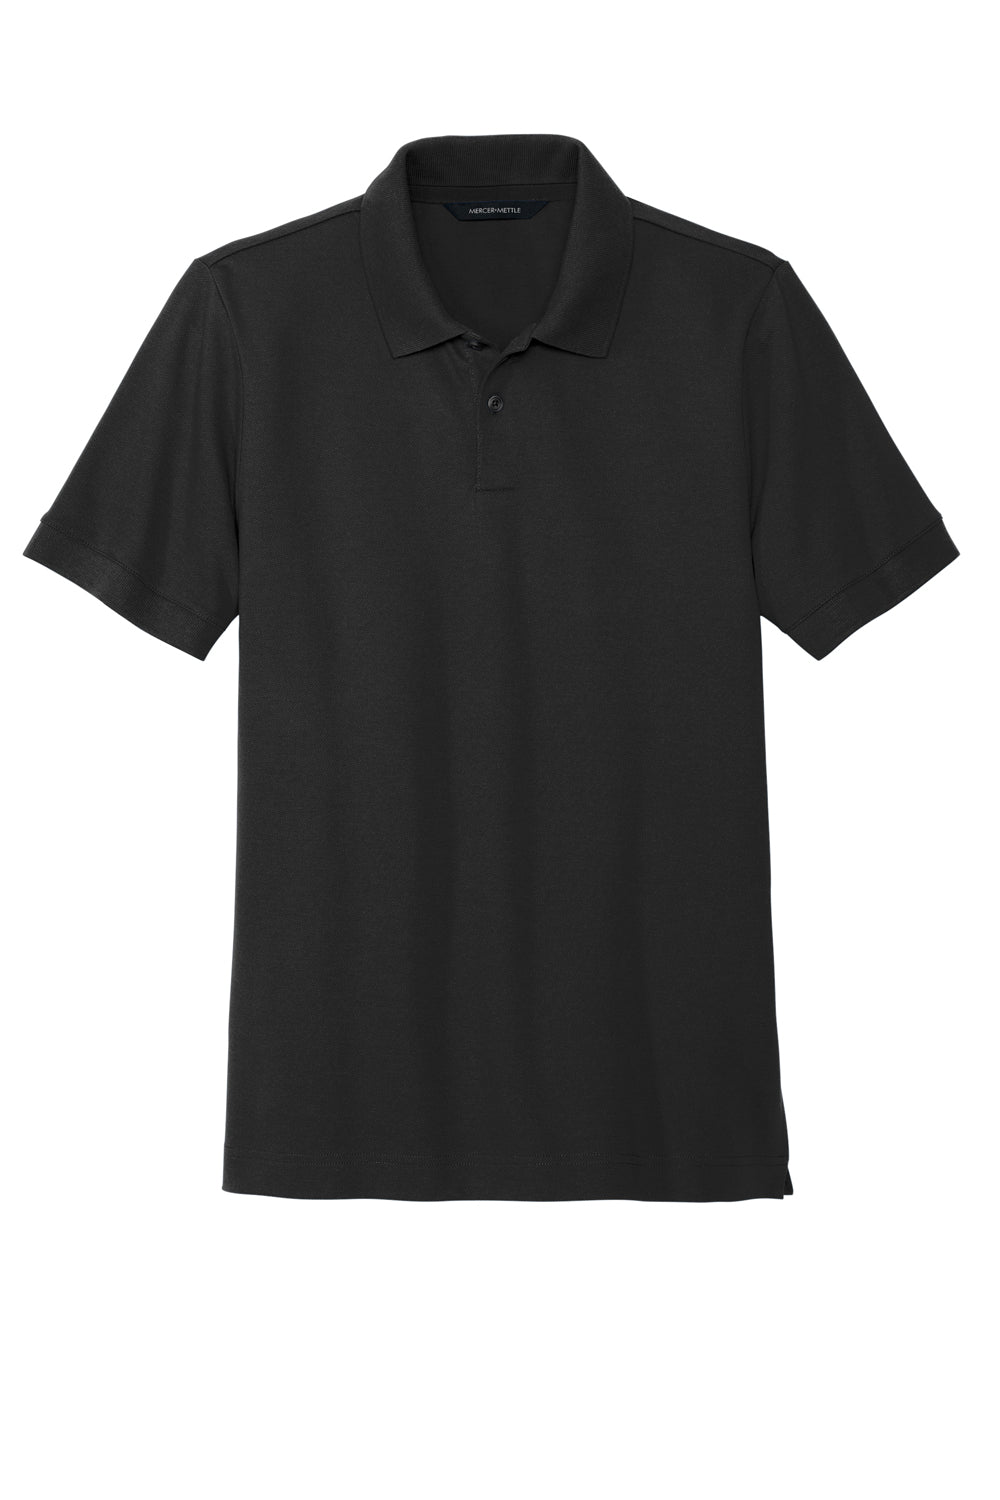 Mercer+Mettle MM1000 Stretch Pique Short Sleeve Polo Shirt Deep Black Flat Front